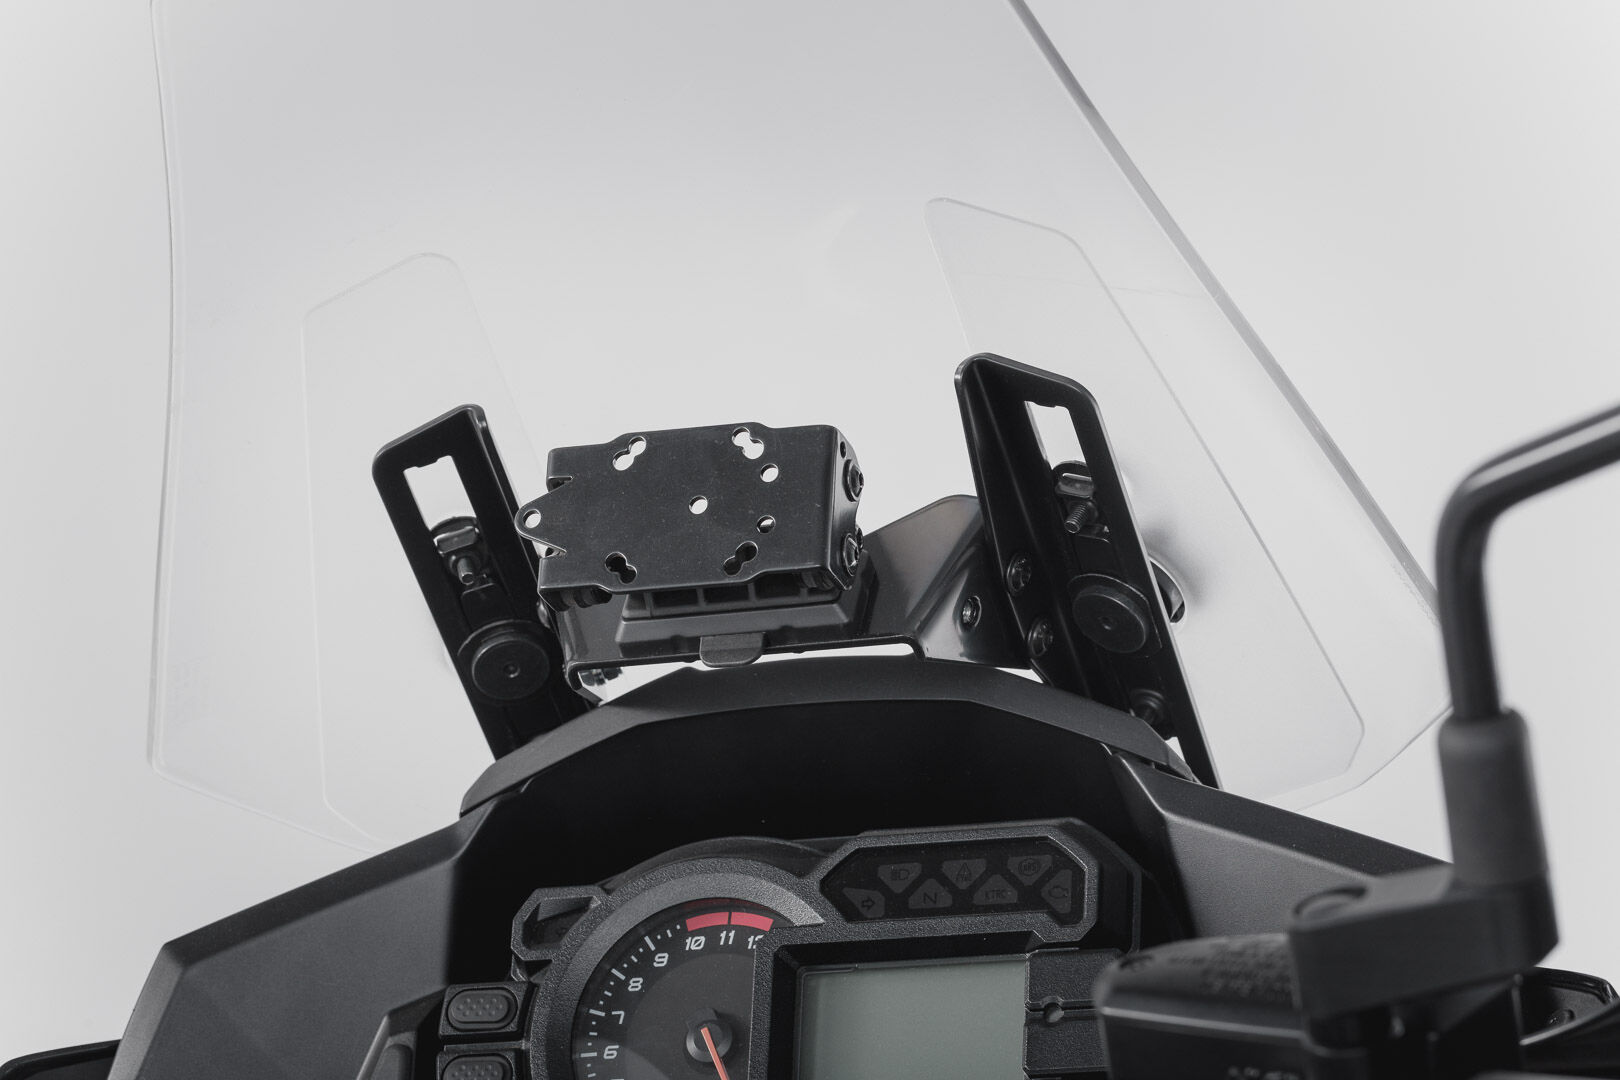 SW-Motech GPS-montering for cockpit - svart. Kawasaki Versys 1000 (15-17).